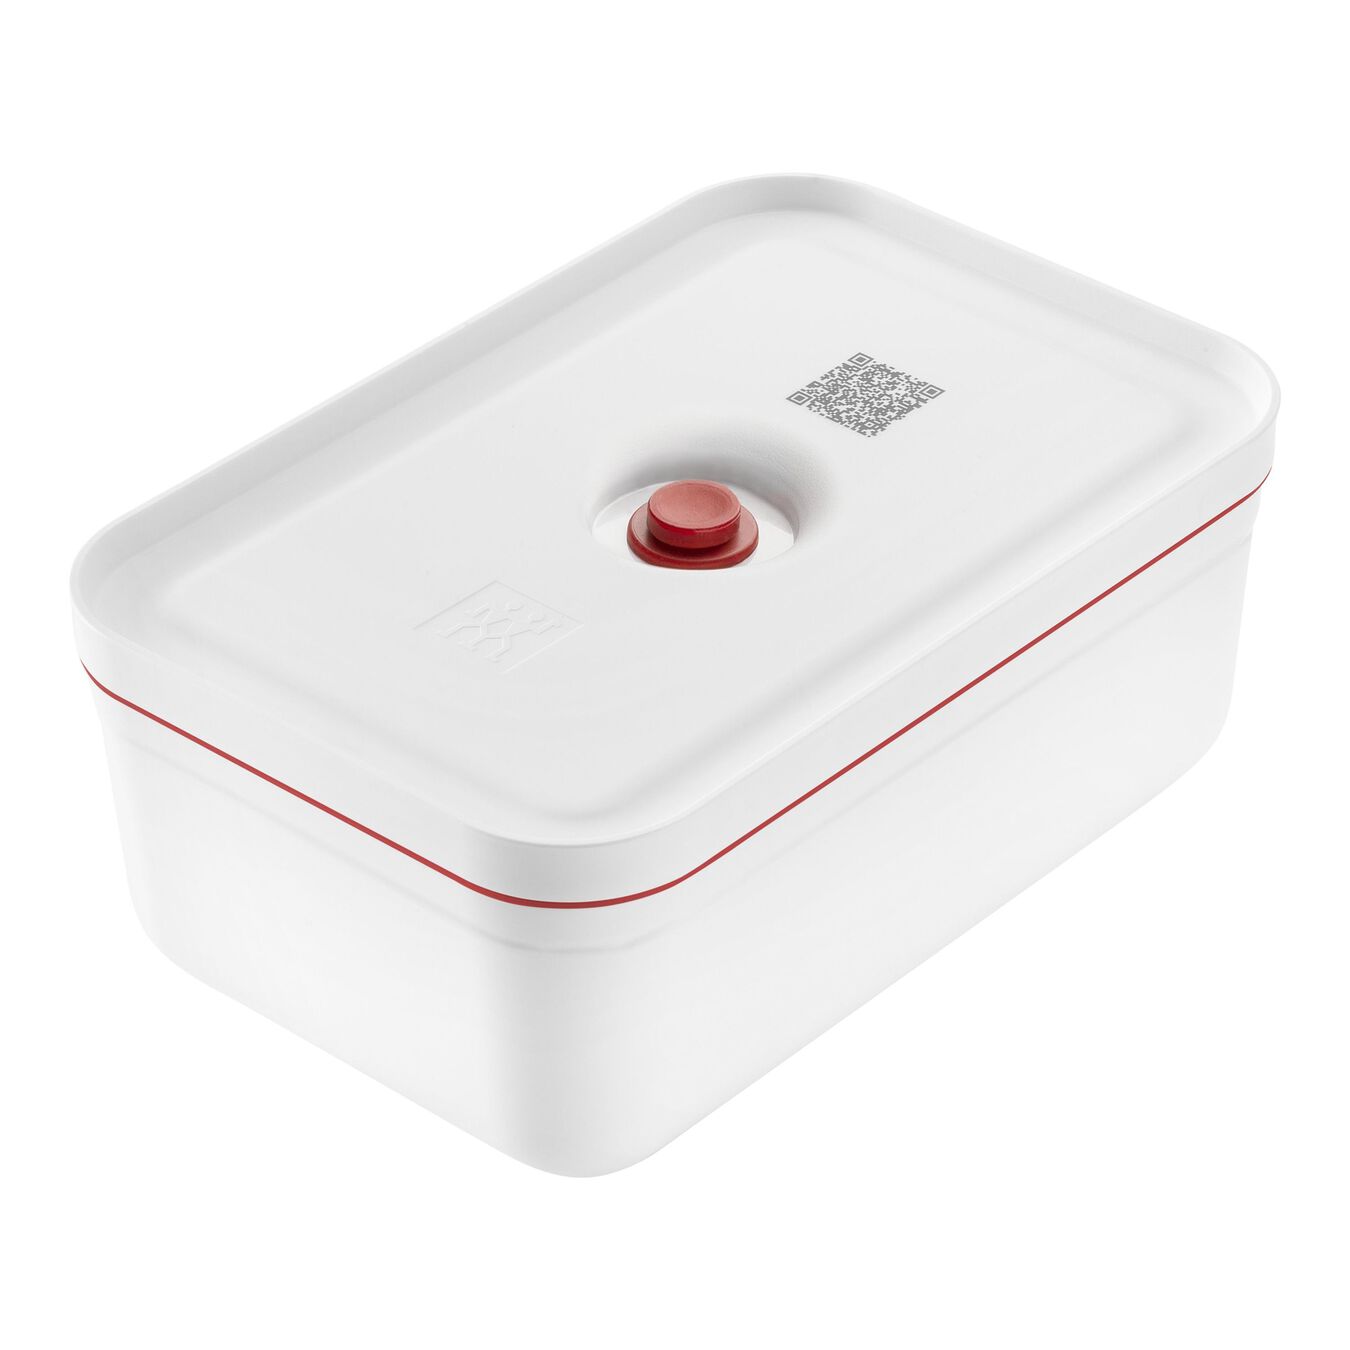 Vakuum Lunchbox L, Kunststoff, Weiß-Rot,,large 1